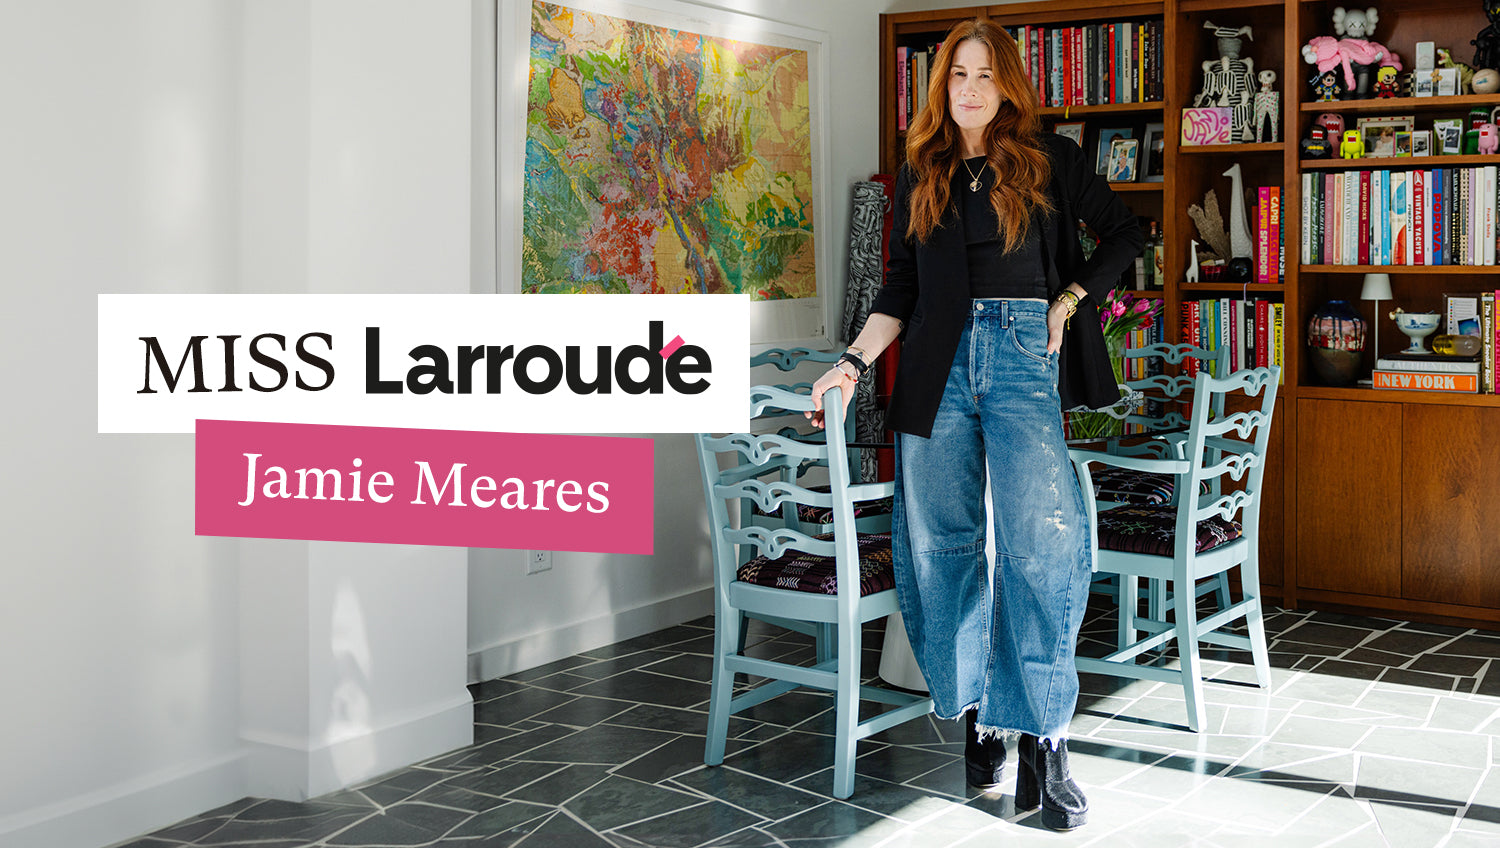 Meet Miss Larroudé: Jamie Meares